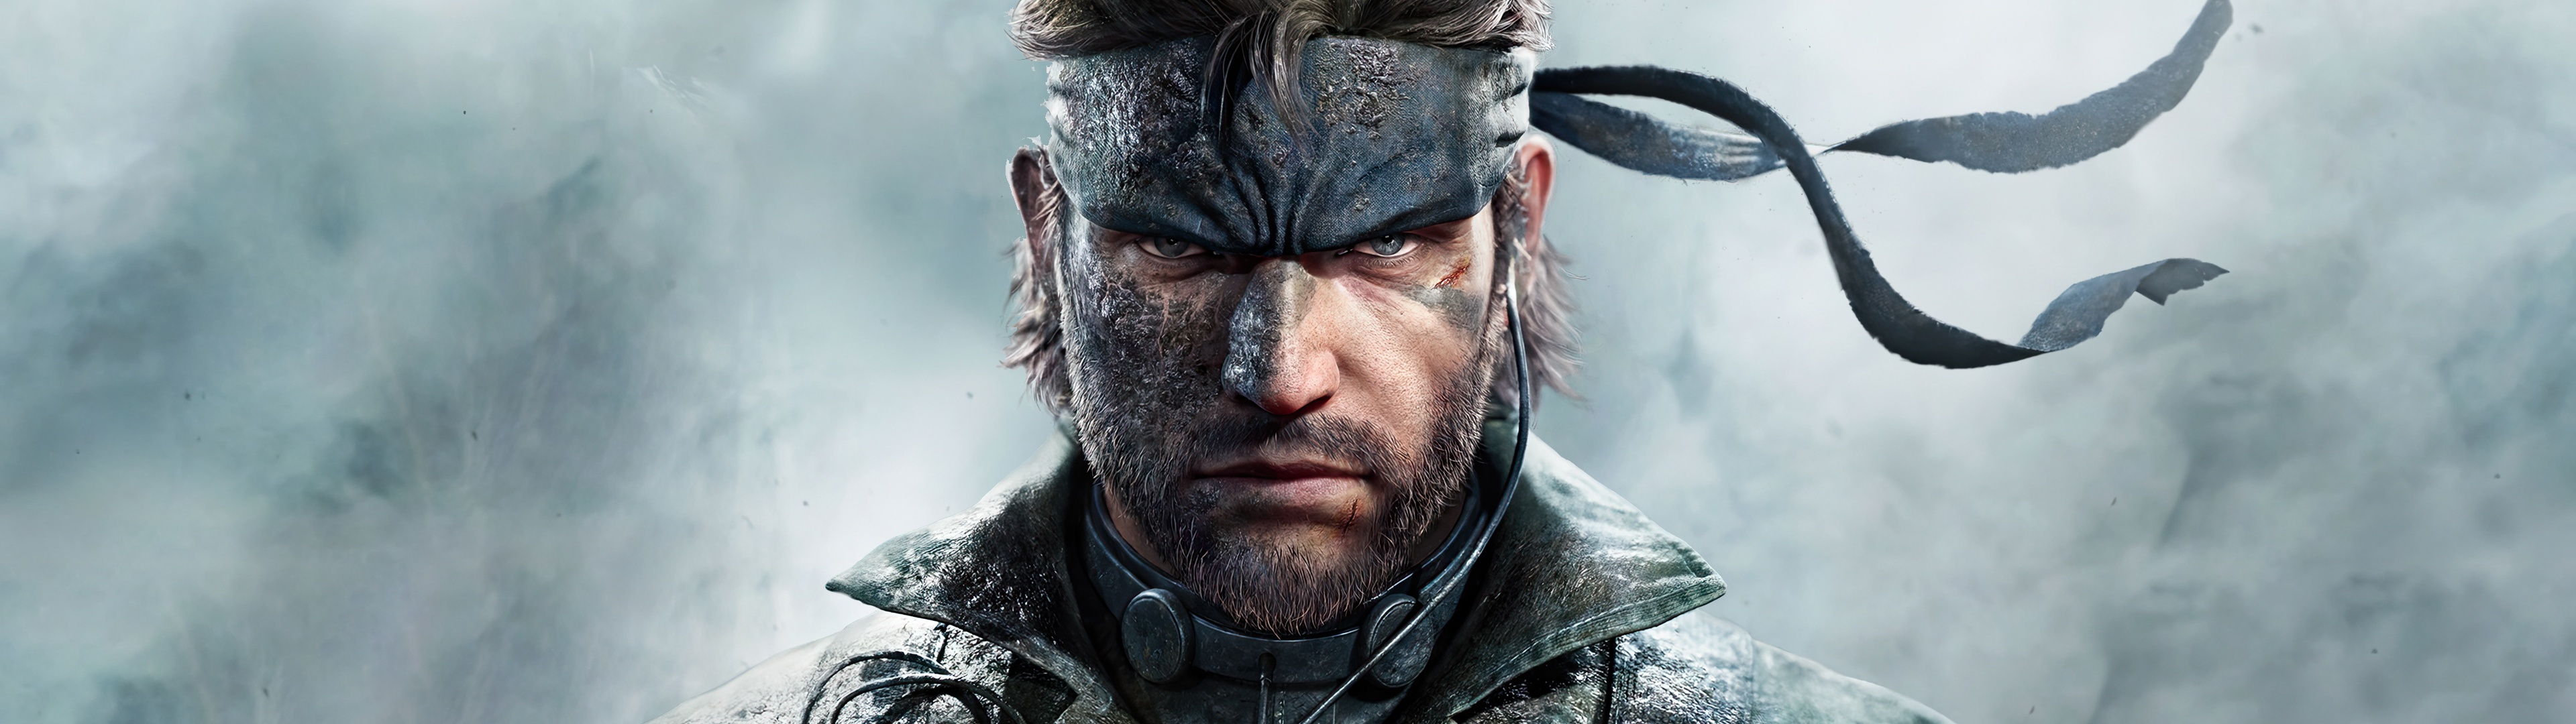 Metal Gear Solid Delta: Snake Eater Wallpaper 4K, PC Games, PlayStation 5